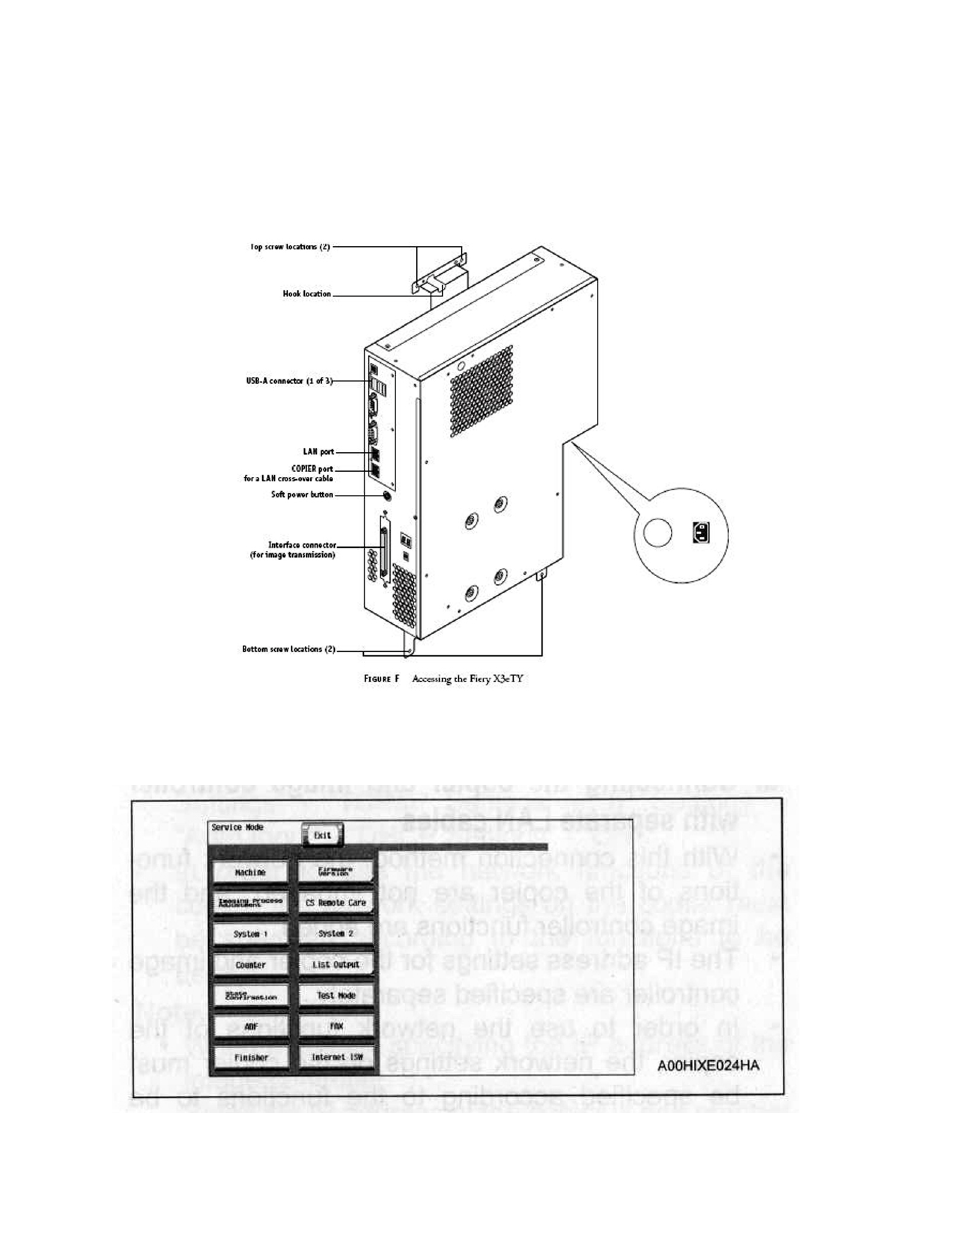 Konica Minolta Bizhub C451 User Manual Page 2 7 Also For Bizhub C650 Ic 409 Bizhub C550